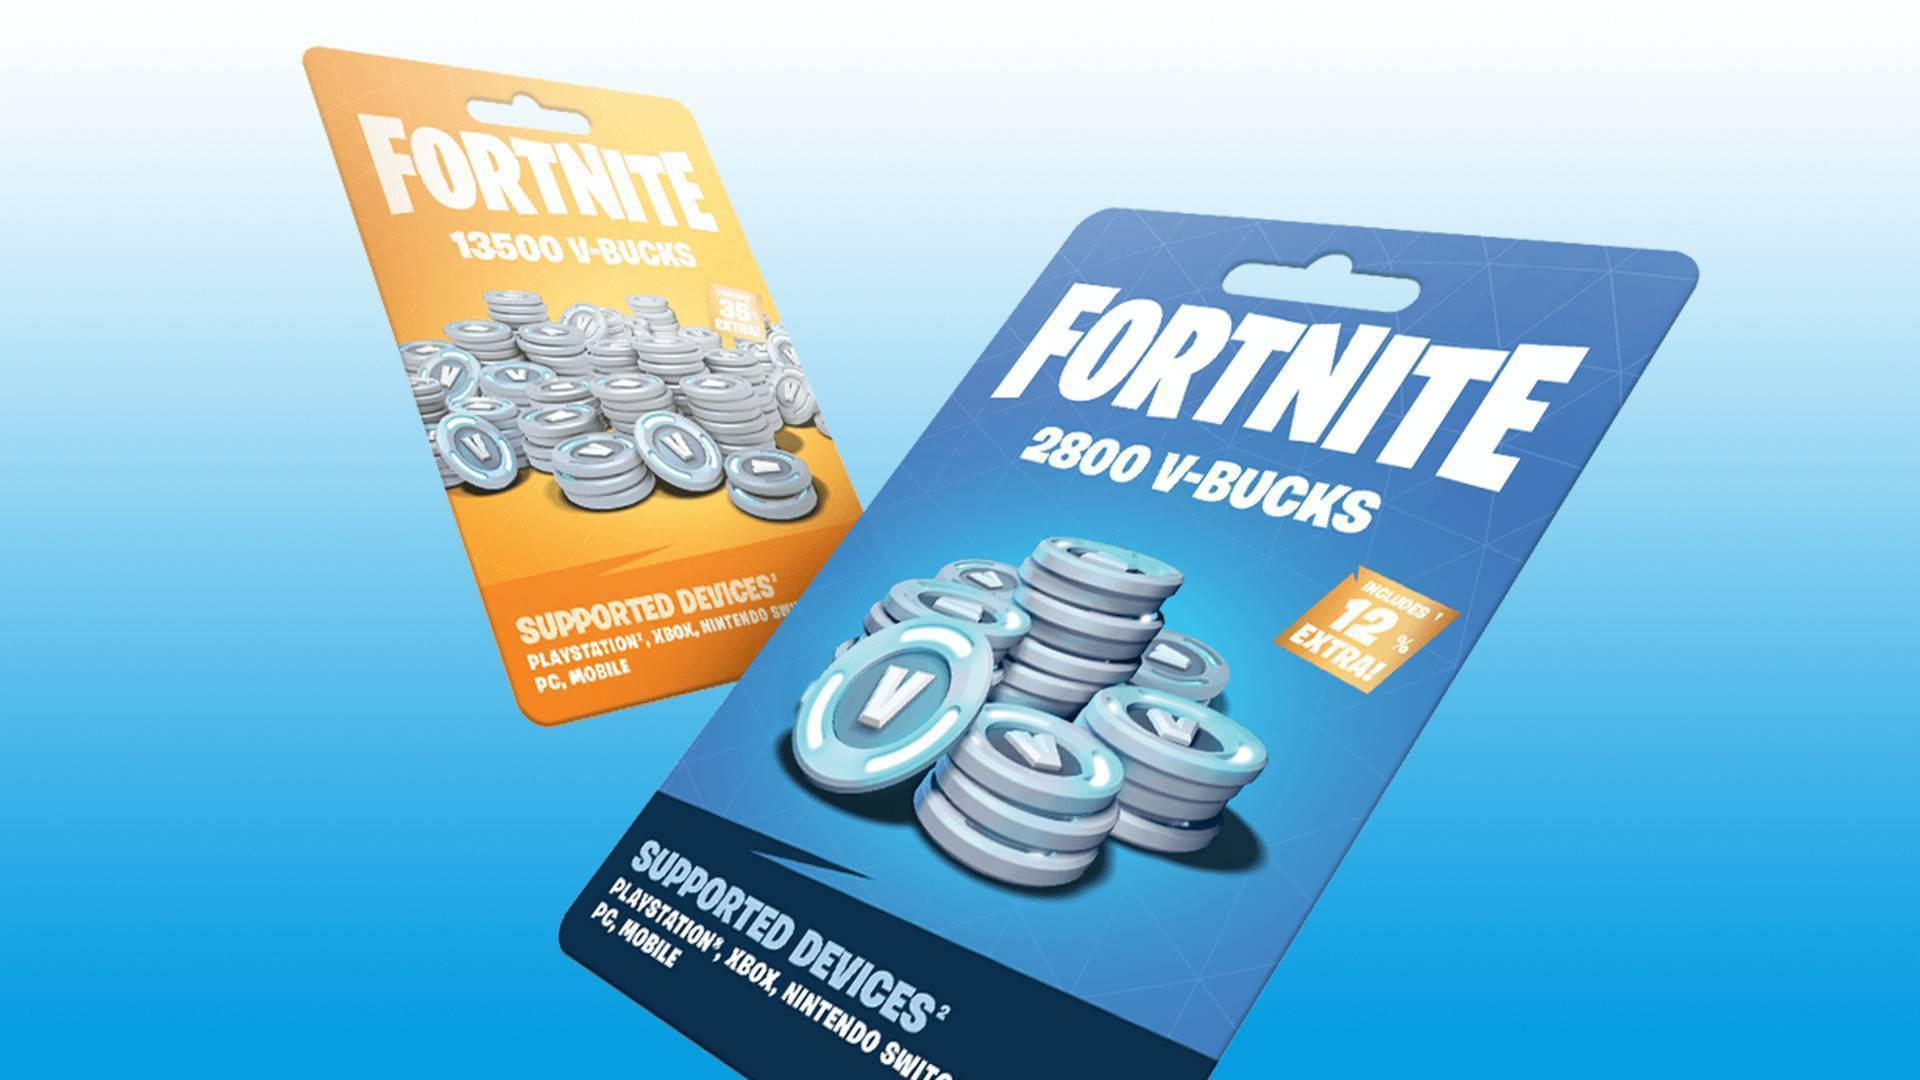 Fortnite 5000 V-Bucks (PC) Key günstig - Preis ab 30,40€ für Epic